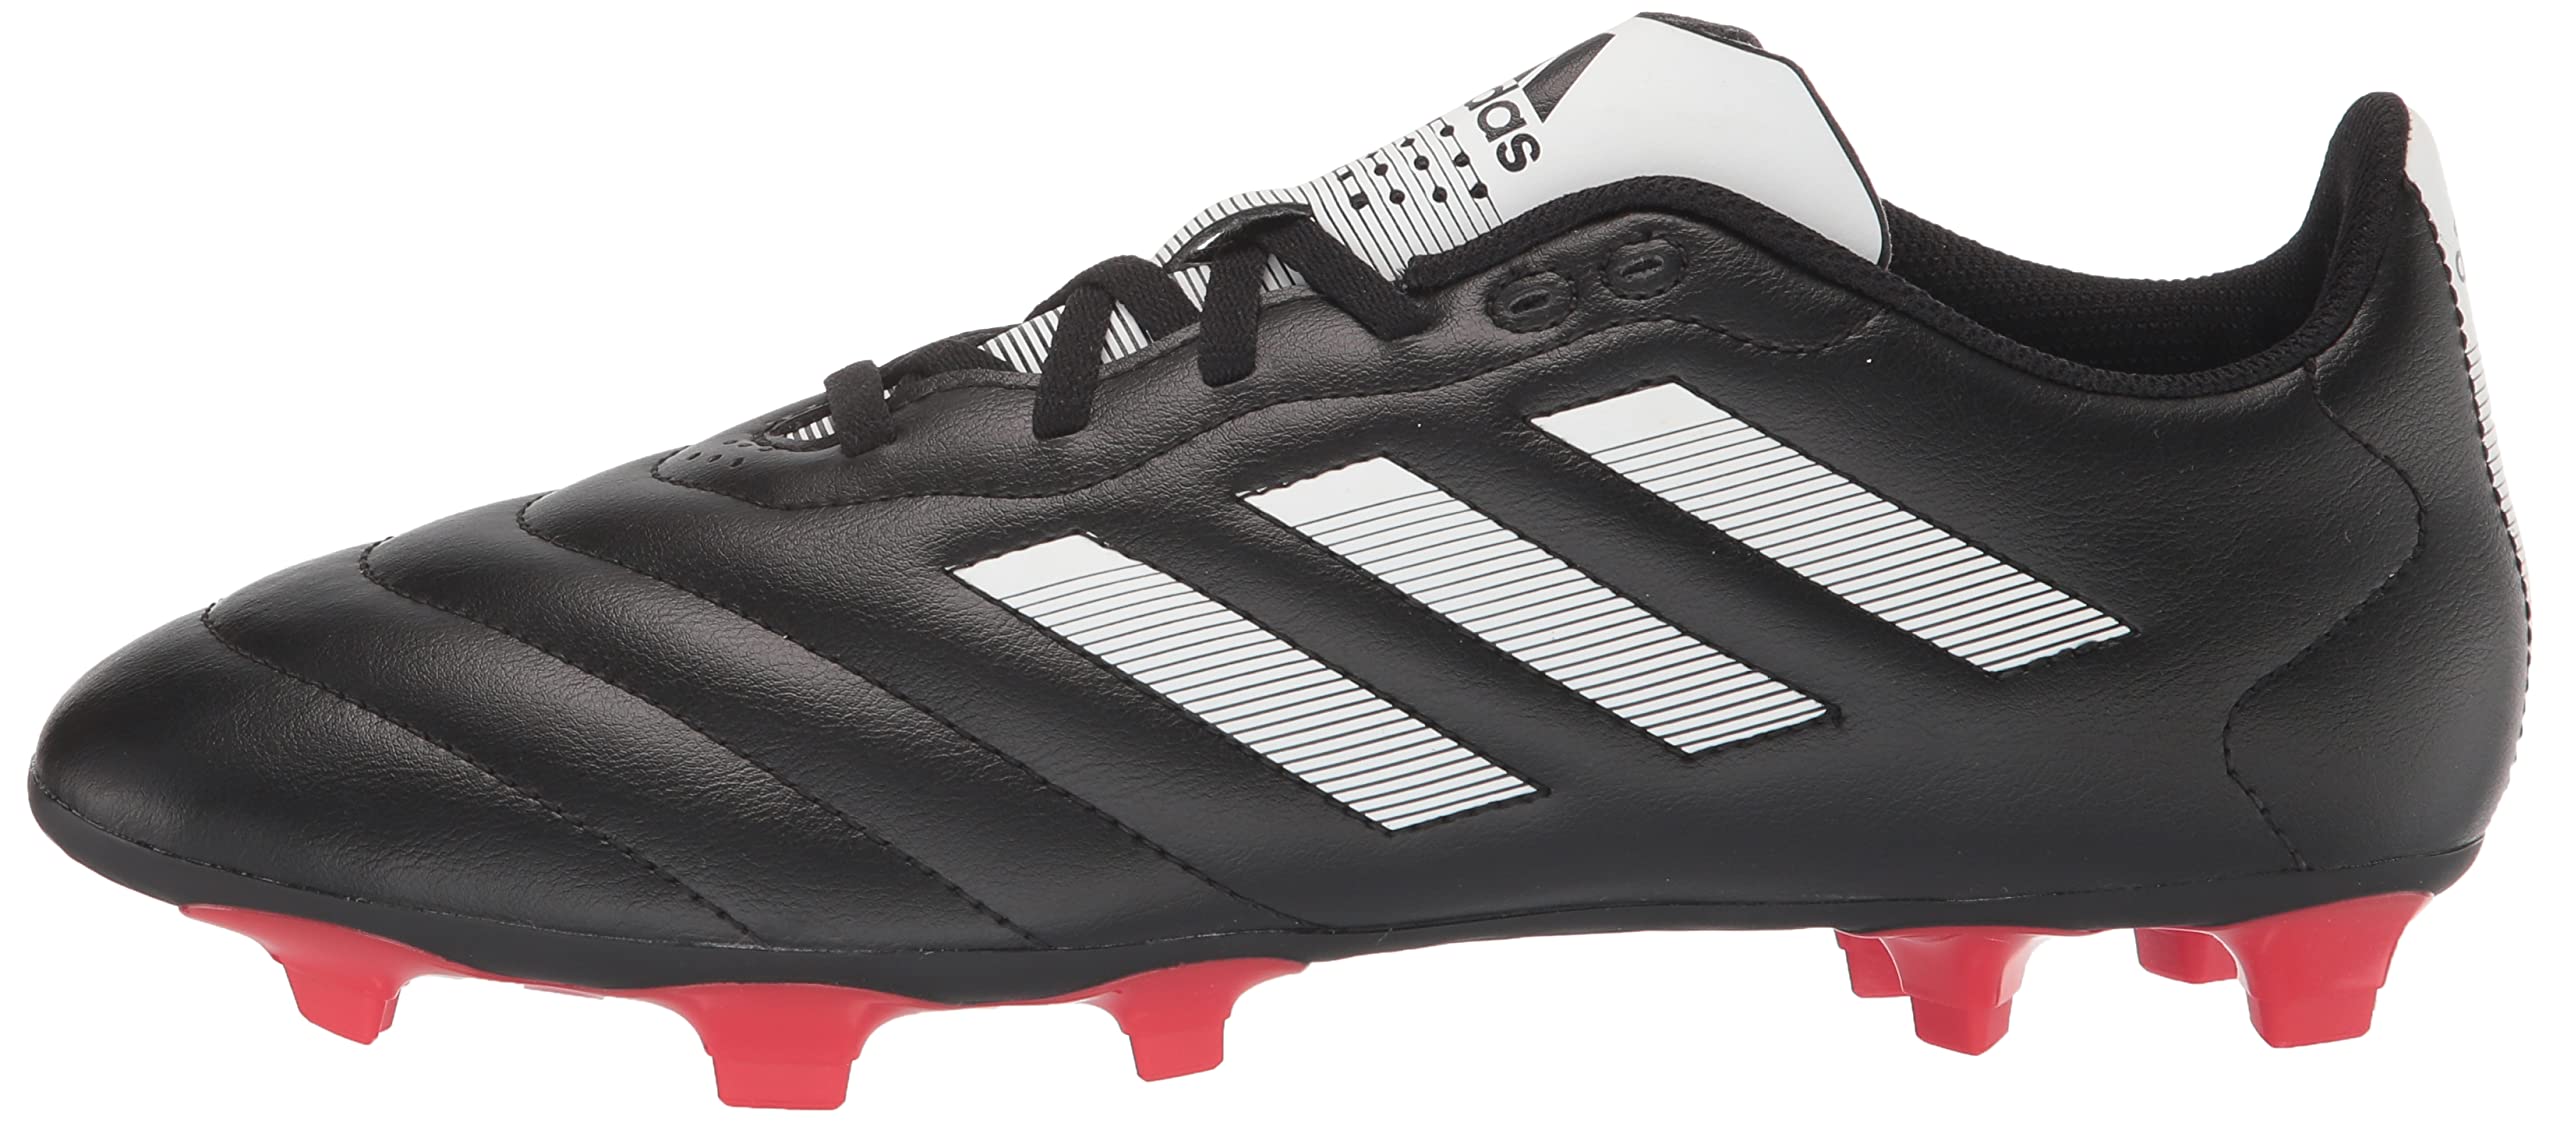 adidas Unisex-Adult Goletto VIII Firm Ground Soccer Shoe